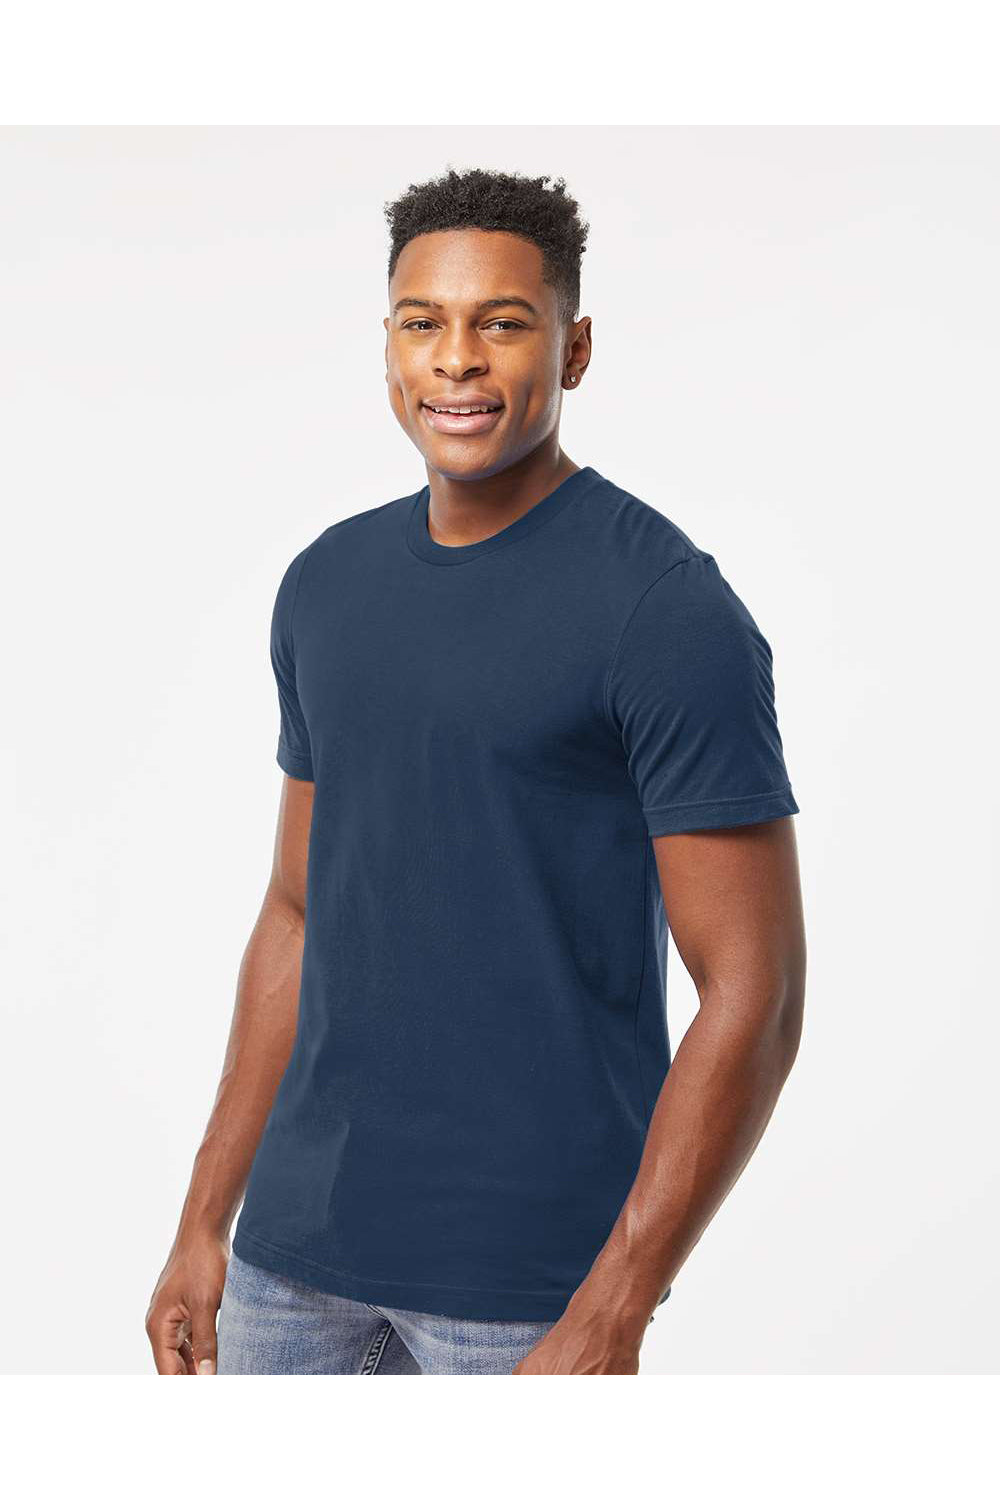 Tultex 602 Mens Short Sleeve Crewneck T-Shirt Navy Blue Model Side